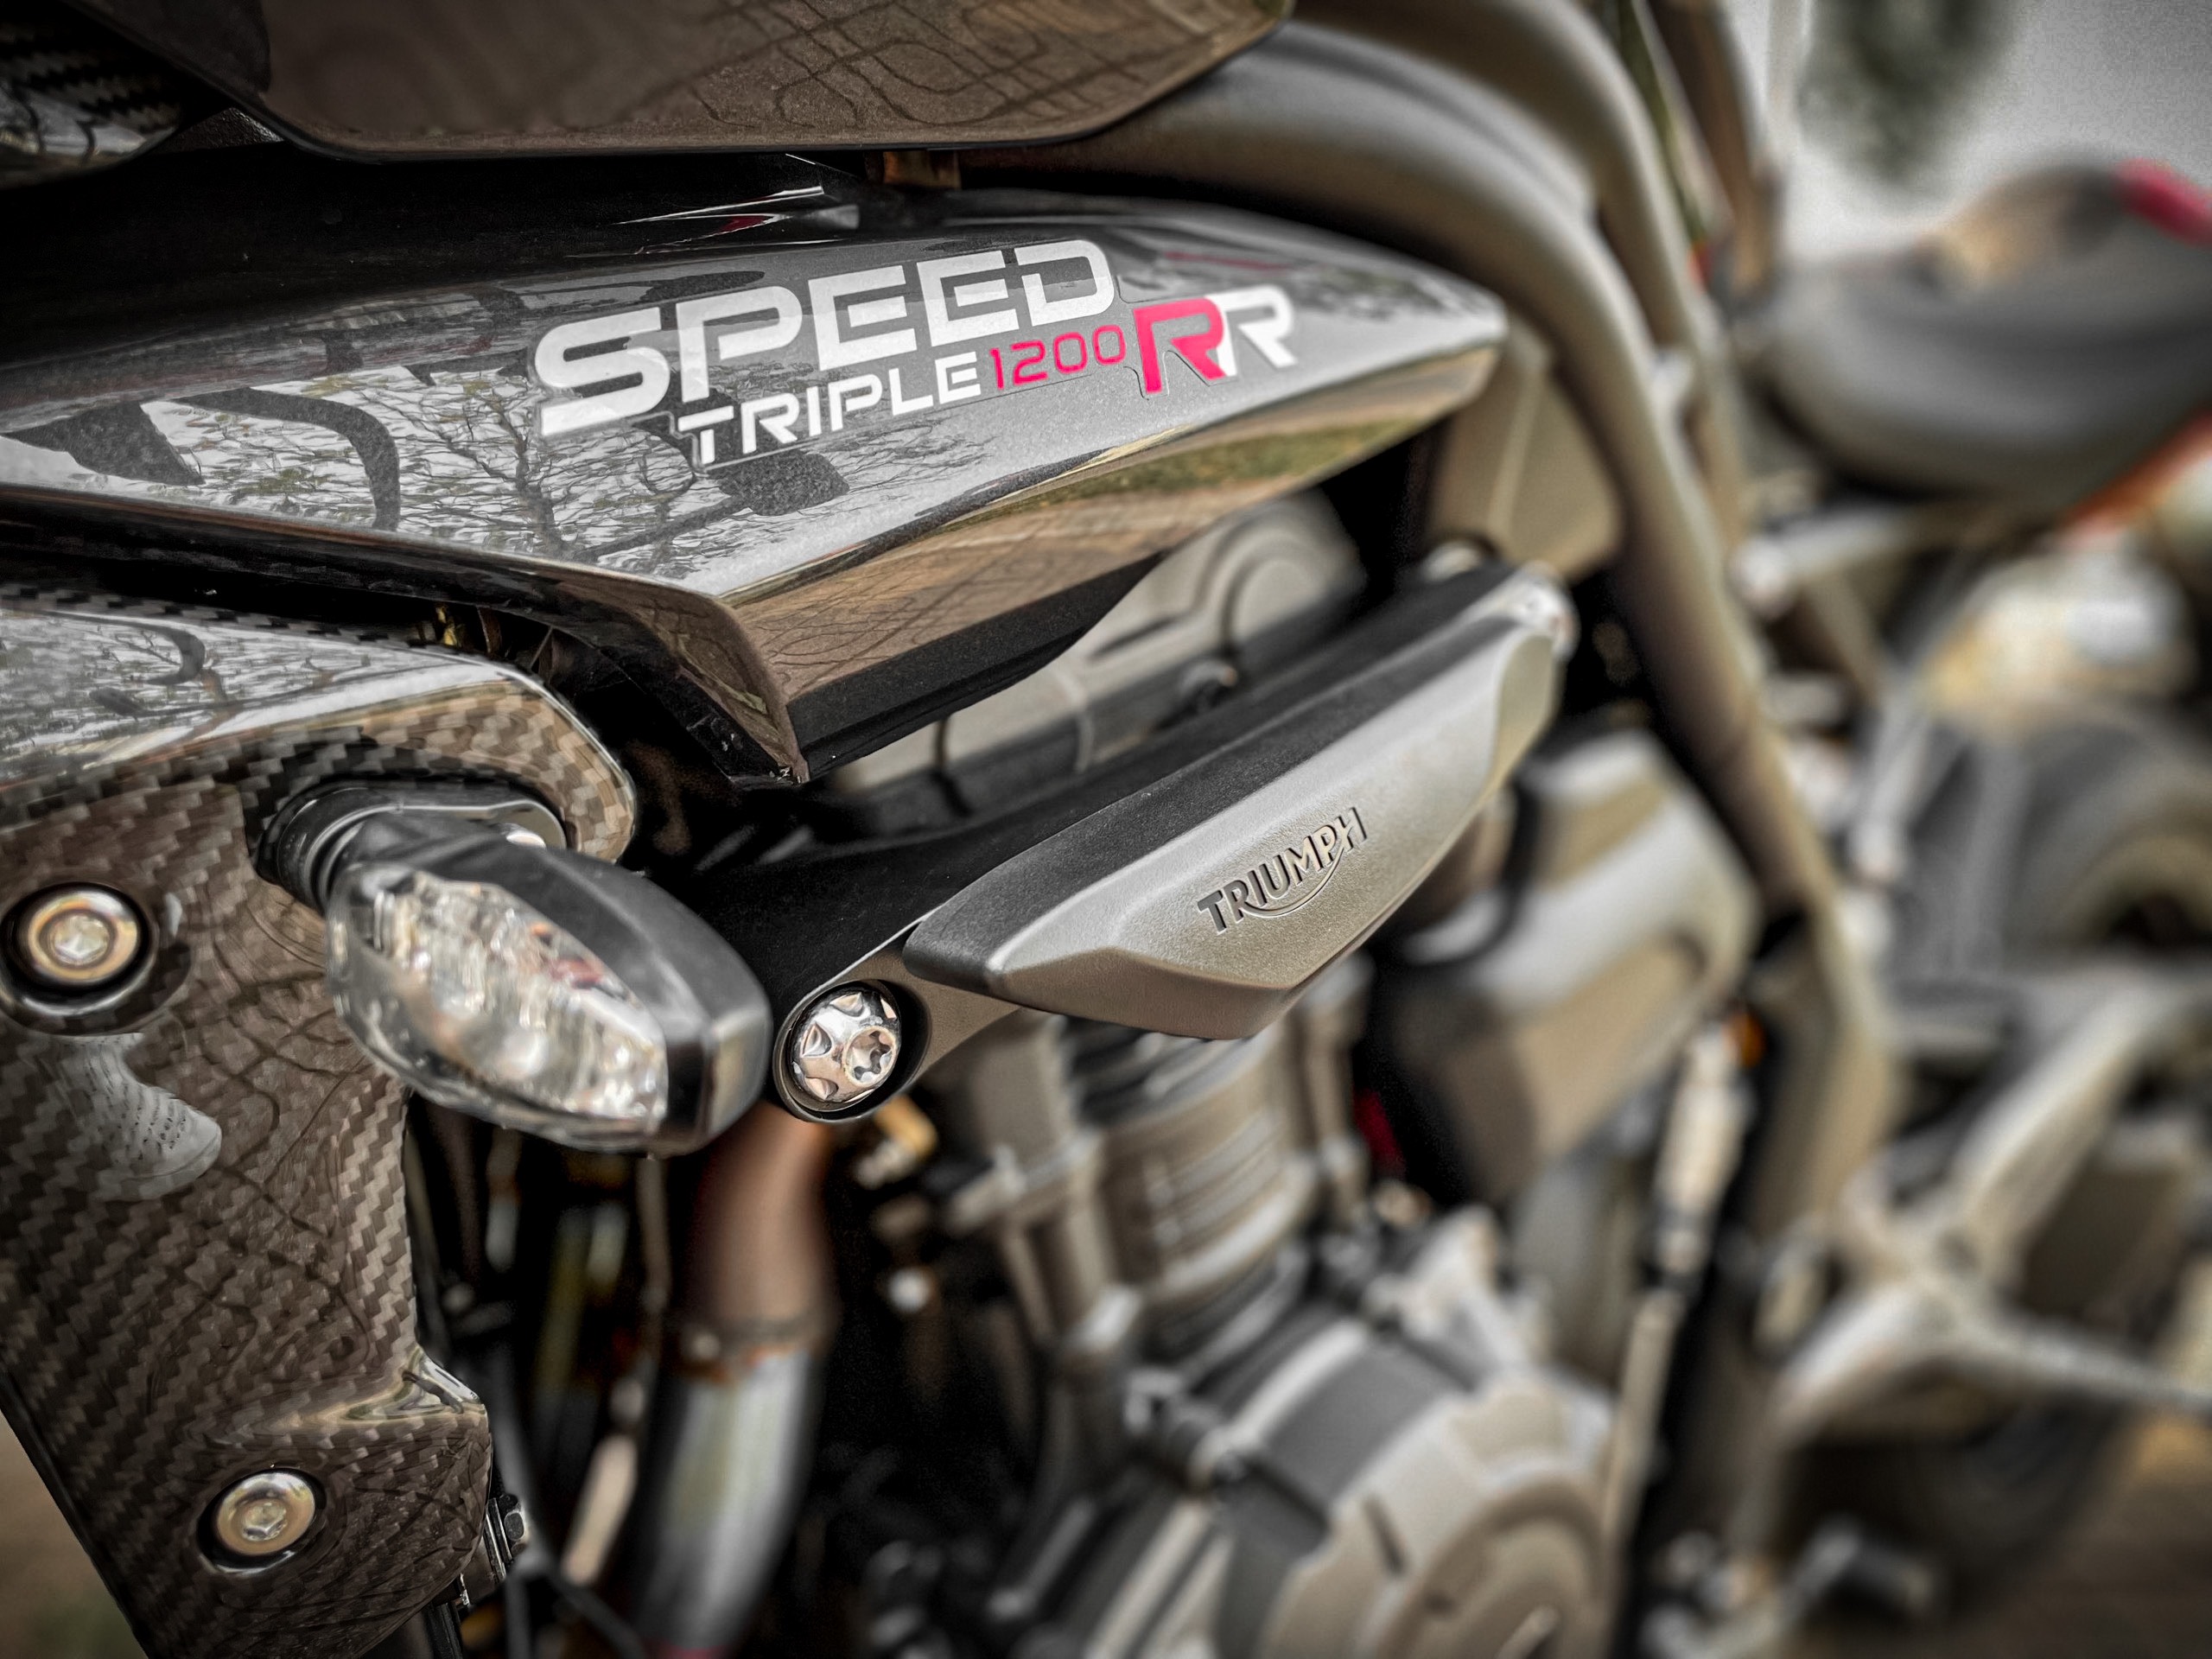 Triumph SpeedTriple 1200RR 2022